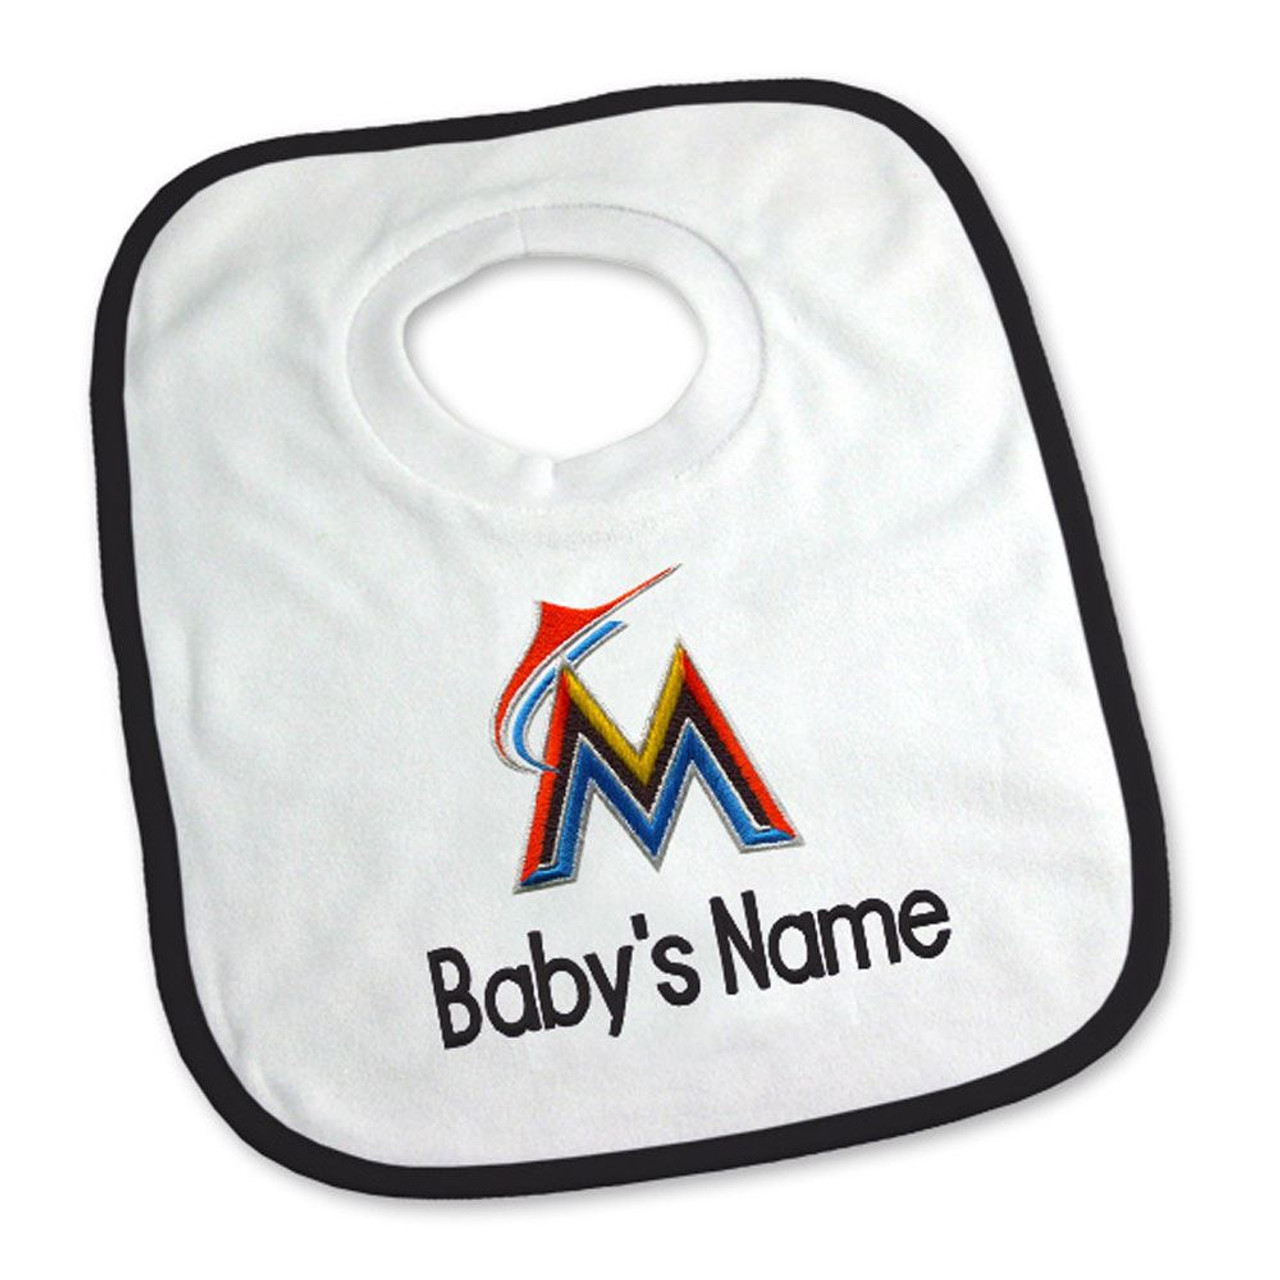 MLB Miami Marlins Toddler Boys' Pullover Jersey - 2T